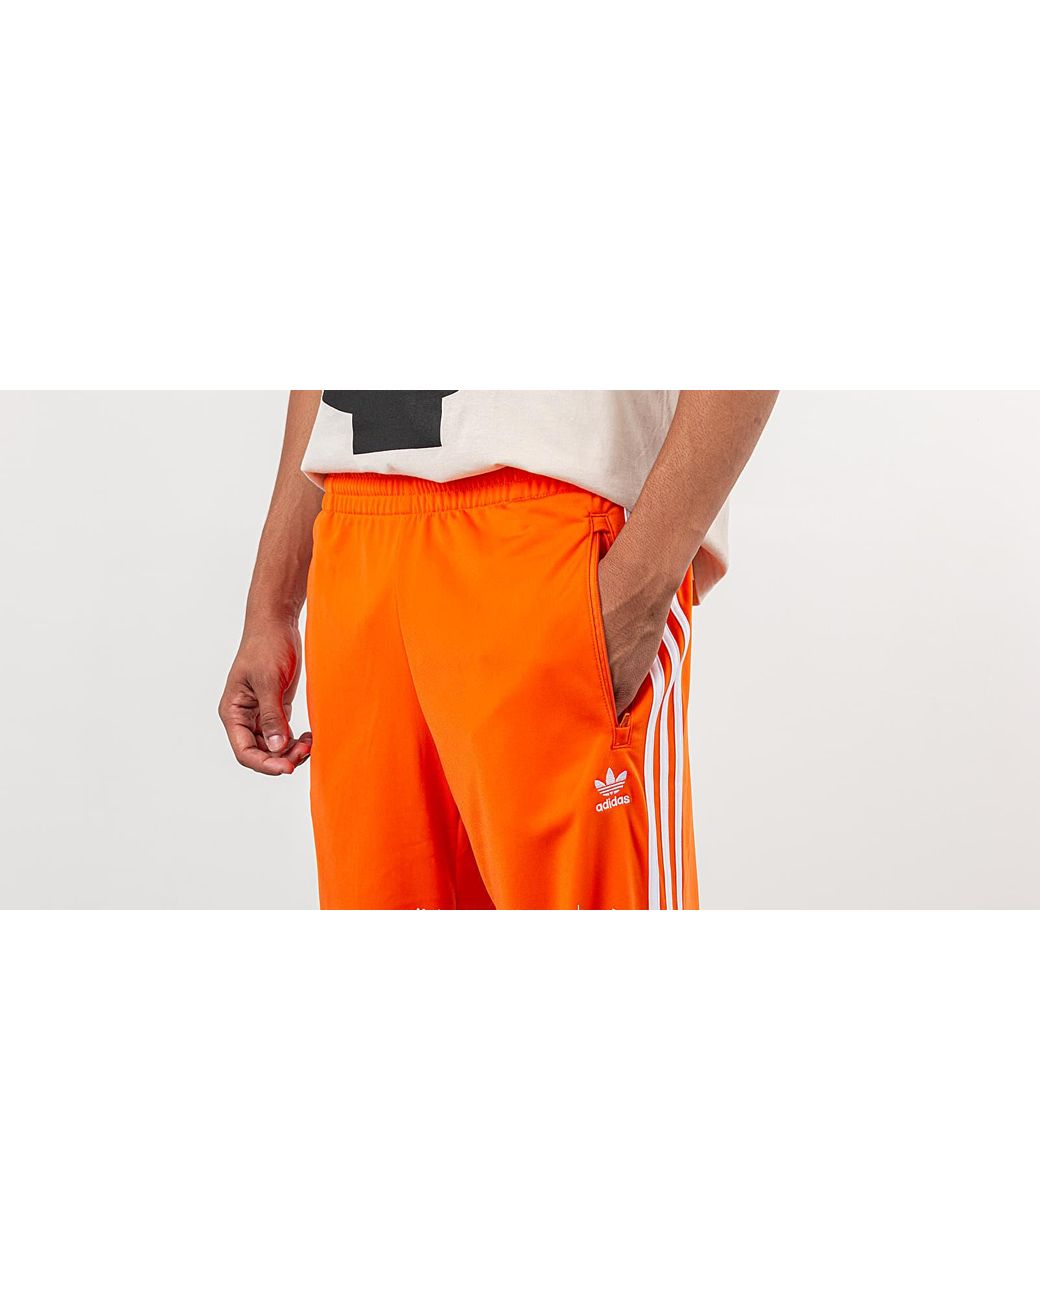 Adidas Firebird Track Pants Orange Dubai SAVE 50  mpgcnet